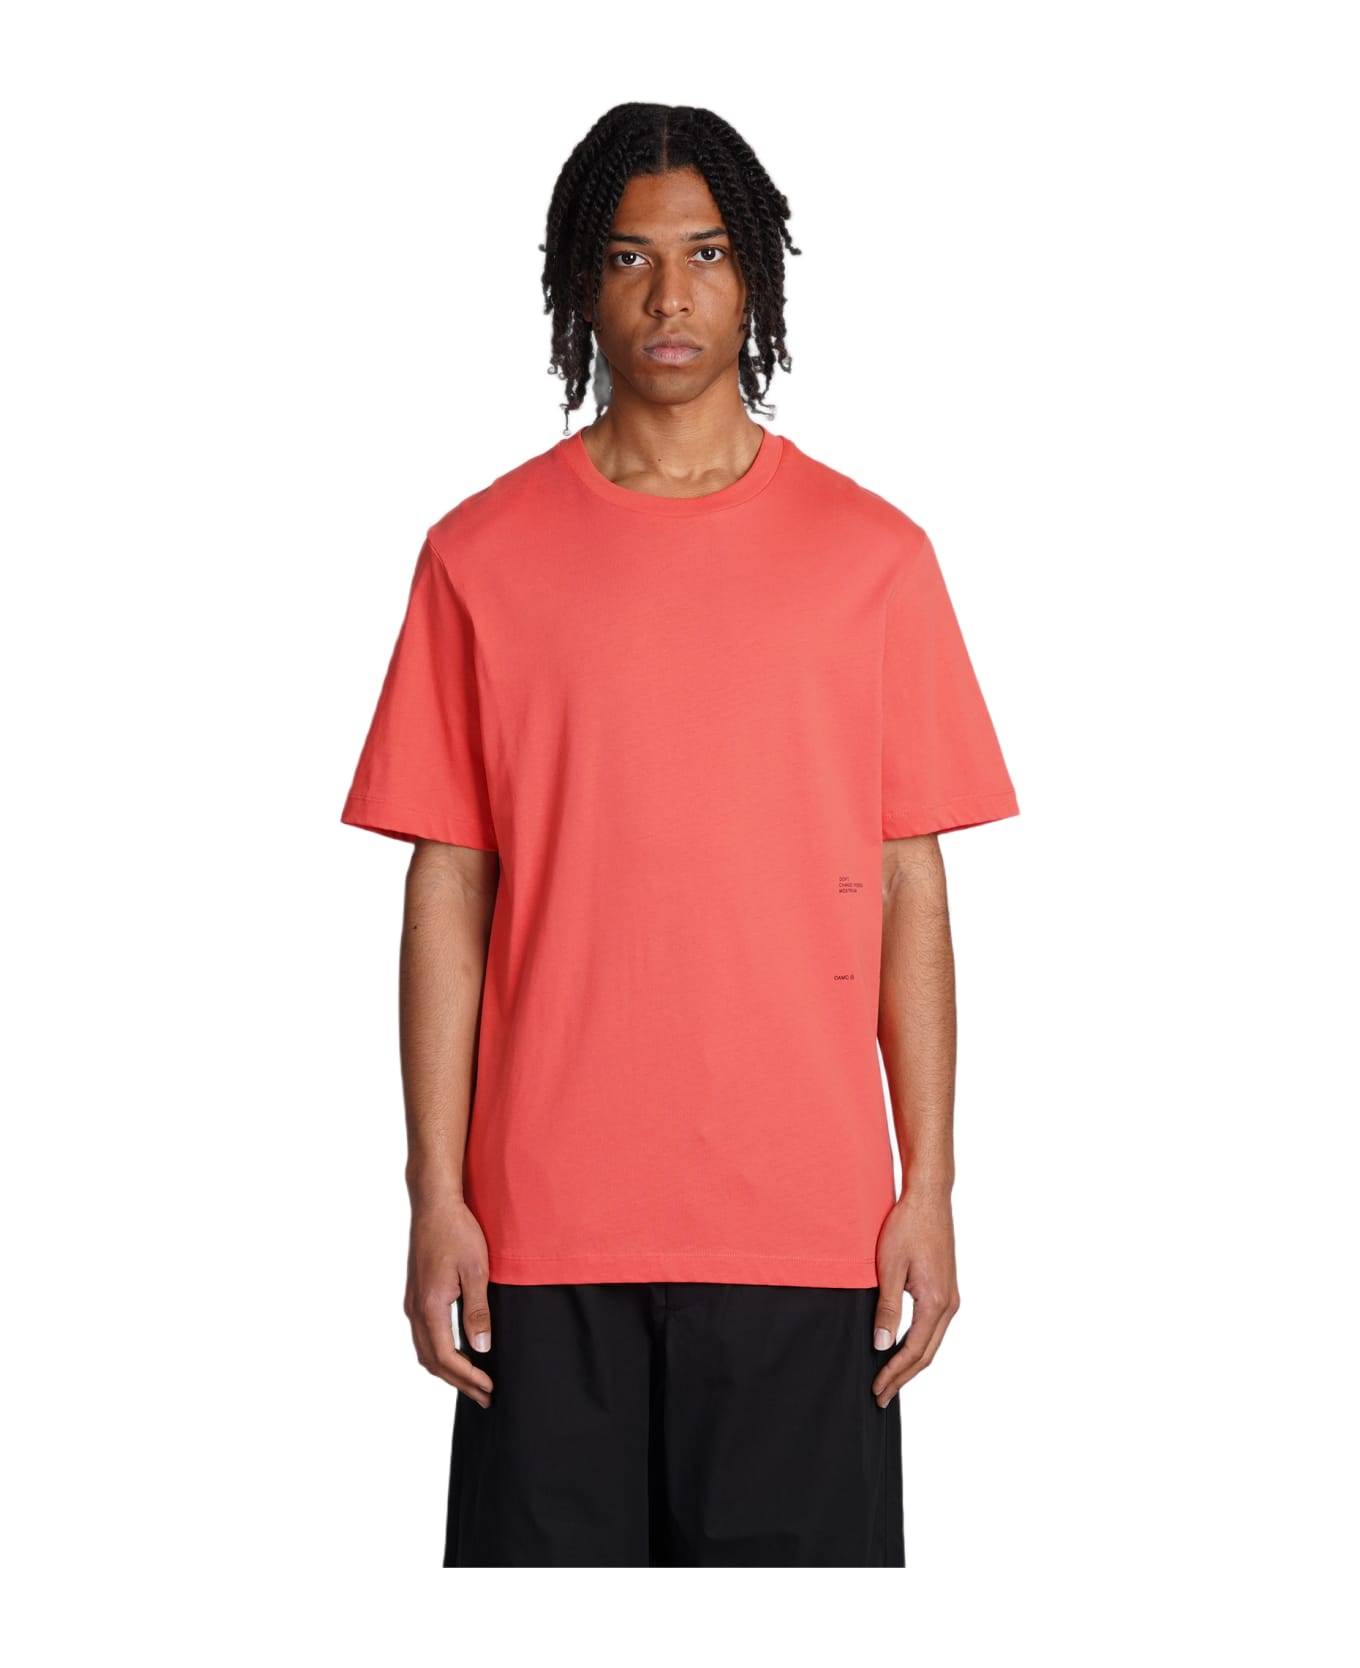 OAMC T-shirt In Orange Cotton - orange